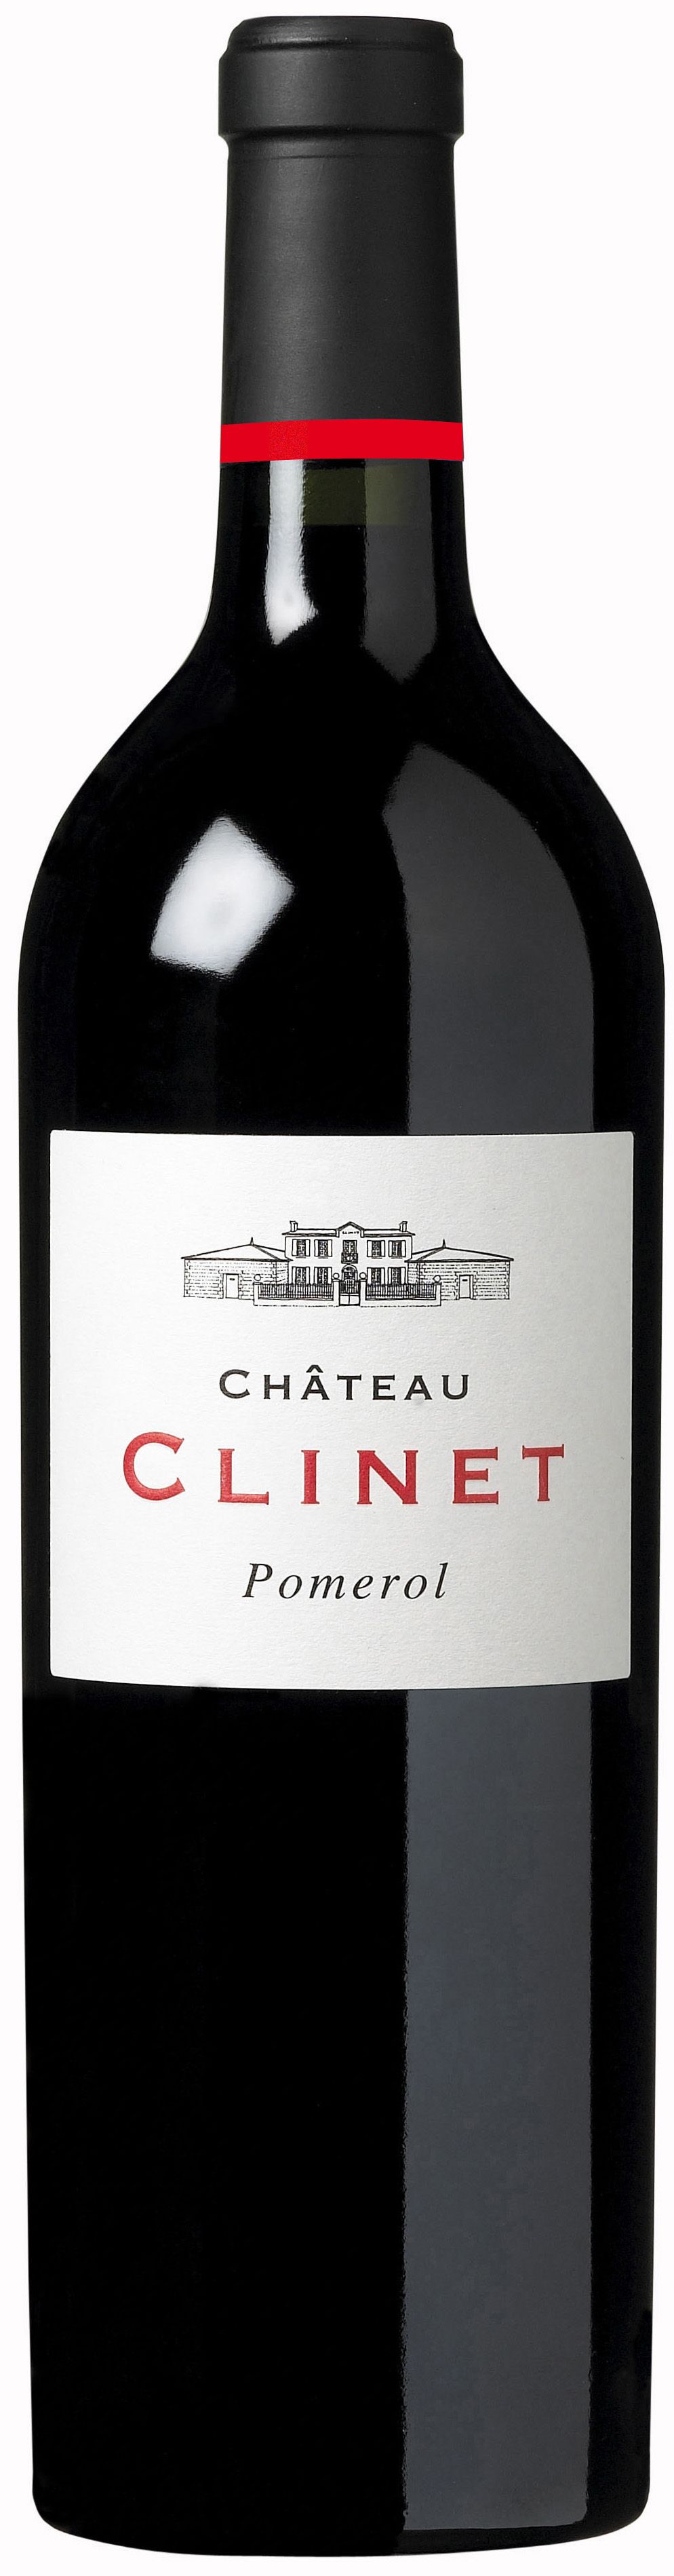 Chateau Clinet, 2016